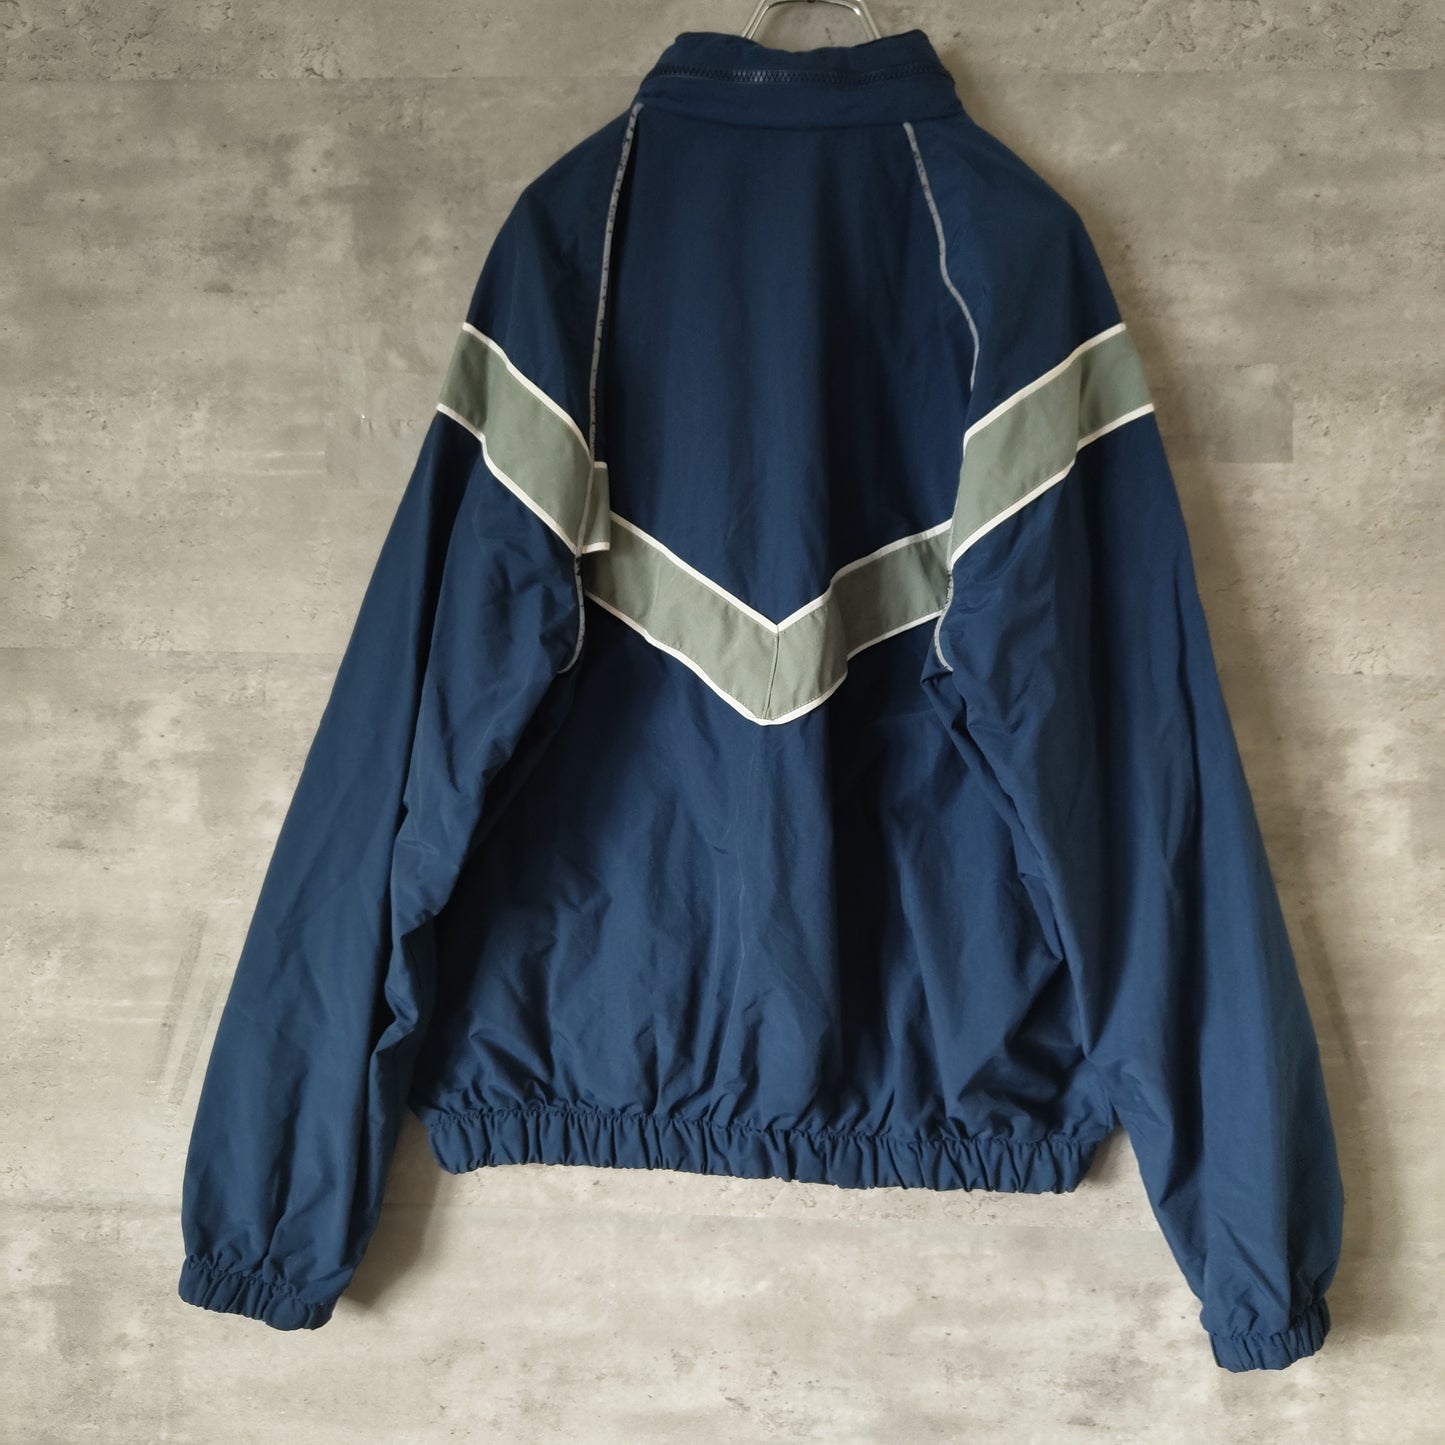 [U.S.AIR FORCE] traning jacket